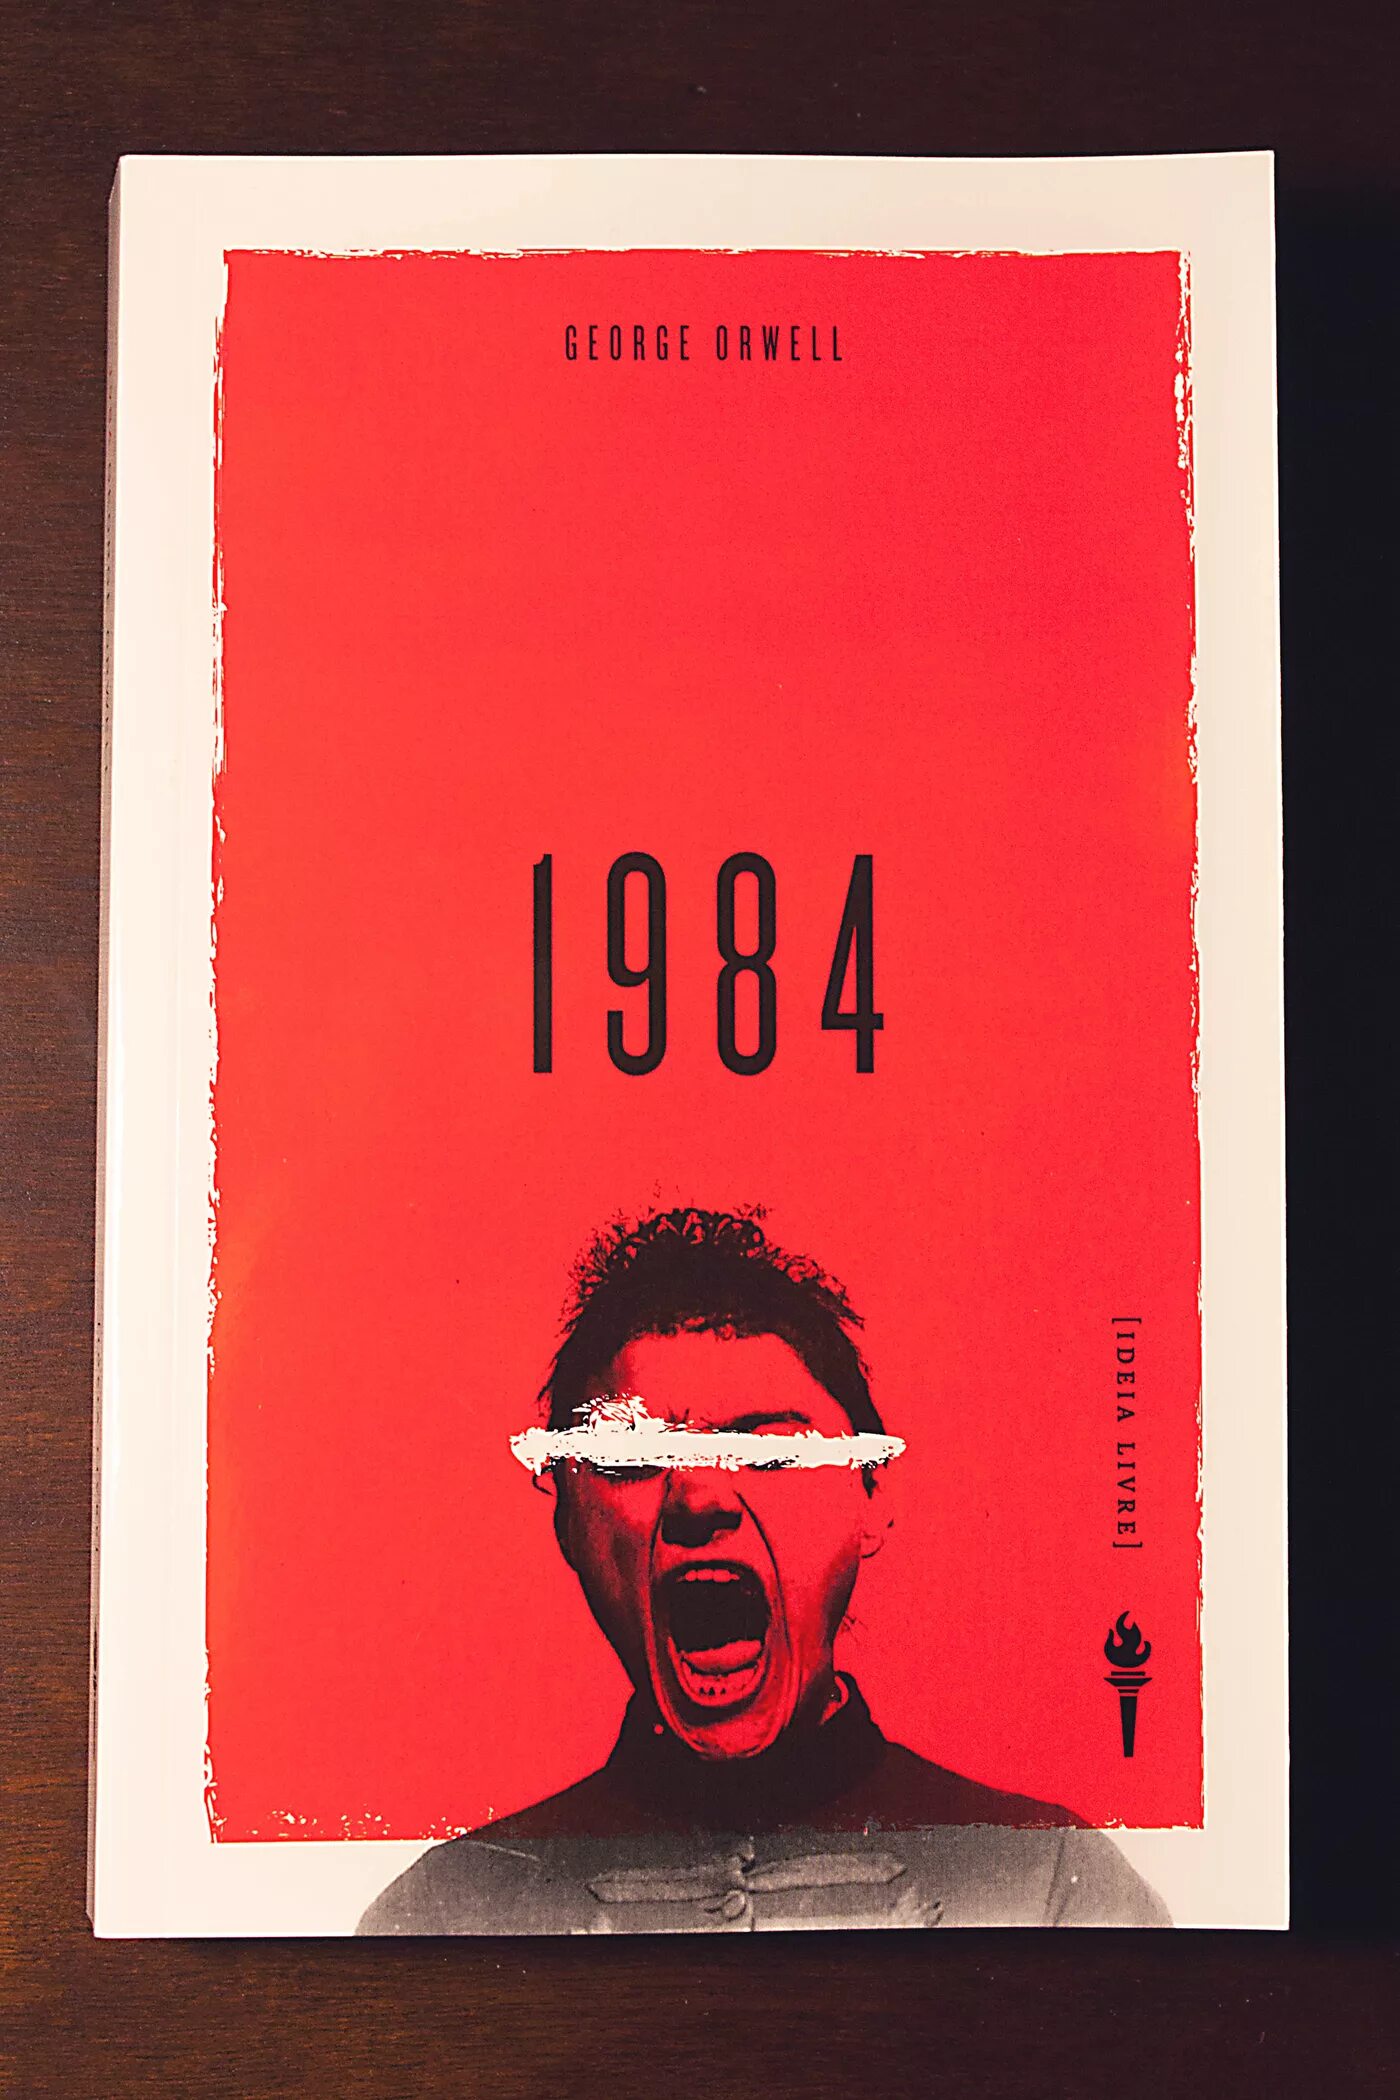 Джордж оруэлл 1984 год. Книга Оруэлла 1984. George Orwell 1984 book. 1984 Джордж Оруэлл книга обложка.